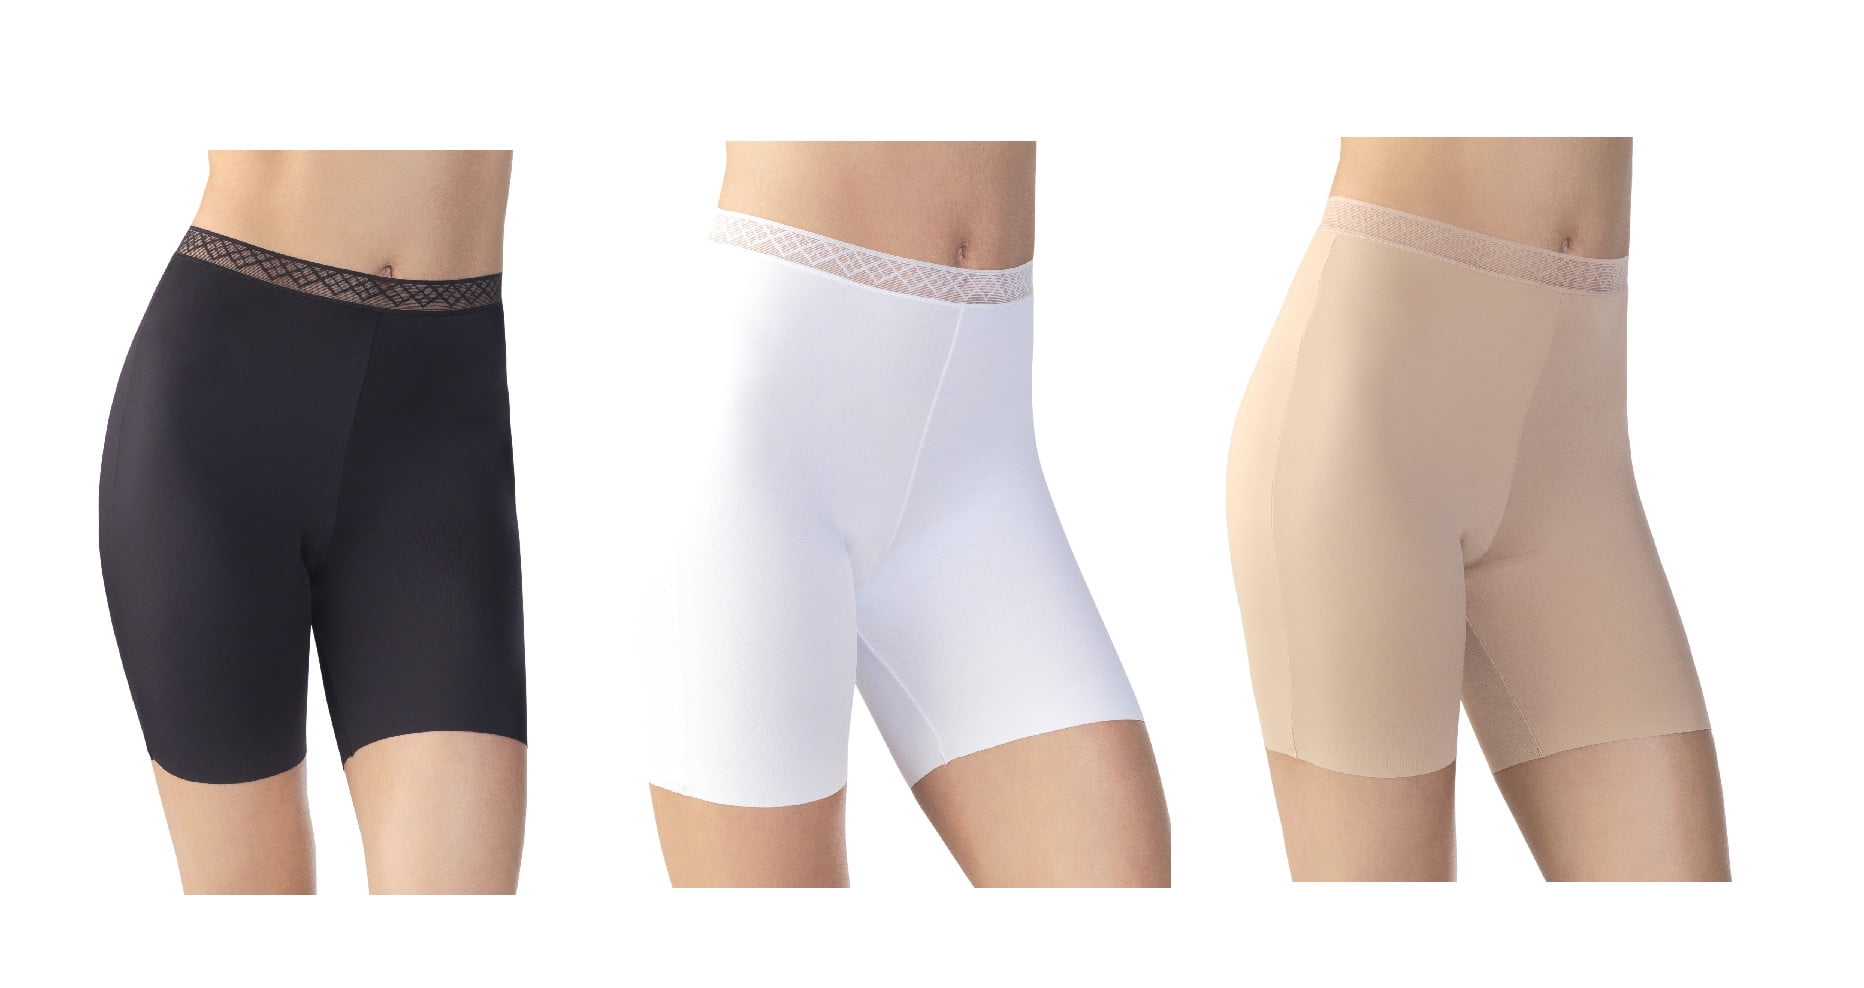 Vassarette Women's 3-Pack Invisibly Smooth Slip Short, Style 12385,  Black/White/Latte, 2XL/9 